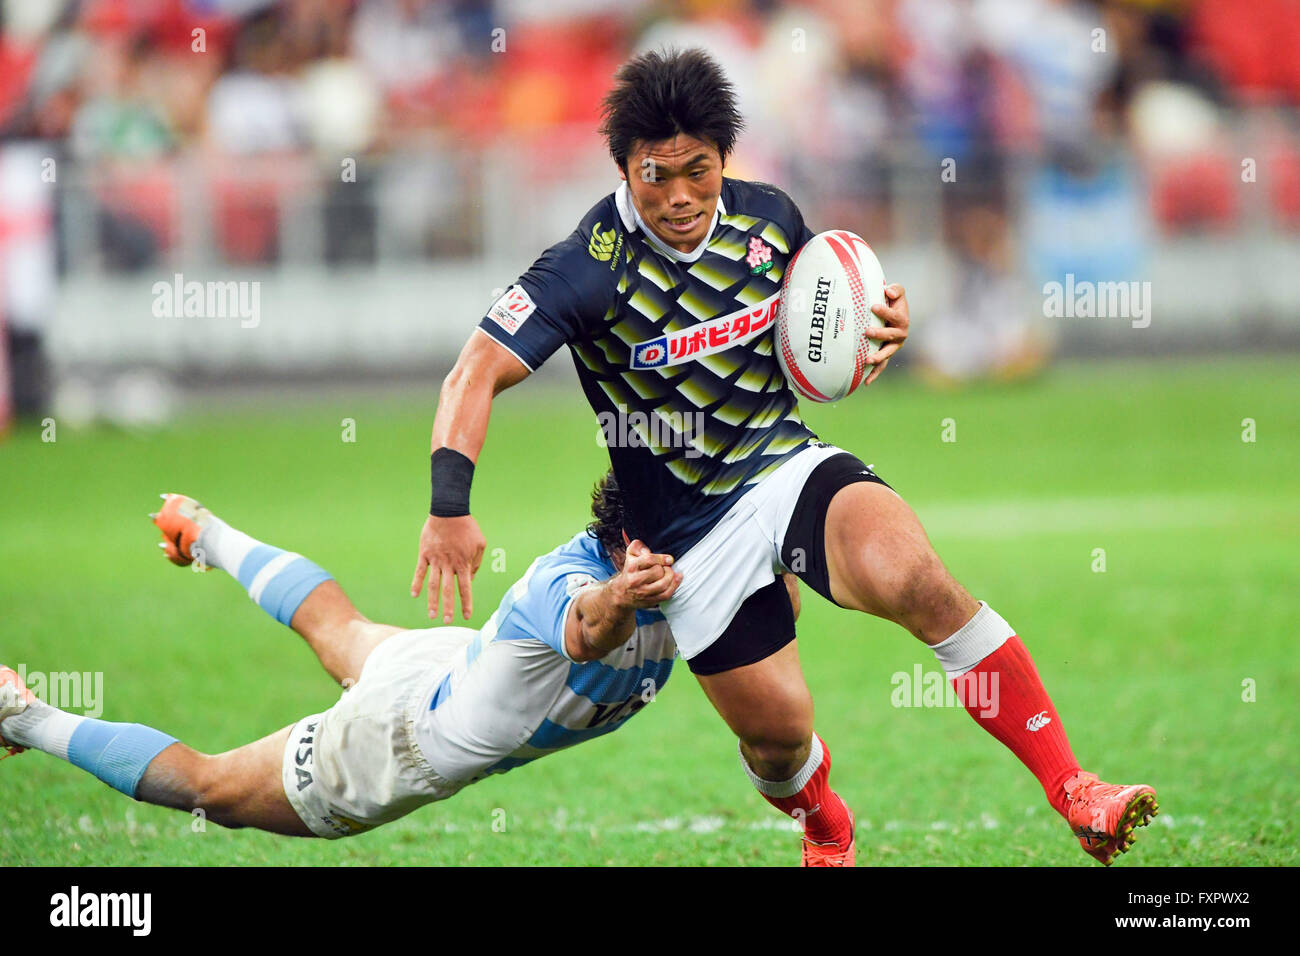 Katsuyuki Sakai (JPN), APRL 16, 2016 - Rugby : HSBC Sevens World Series, Singapore Sevens match Japan and Argentina at National Stadium in Singapore. (Photo by Haruhiko Otsuka/AFLO) Stock Photo